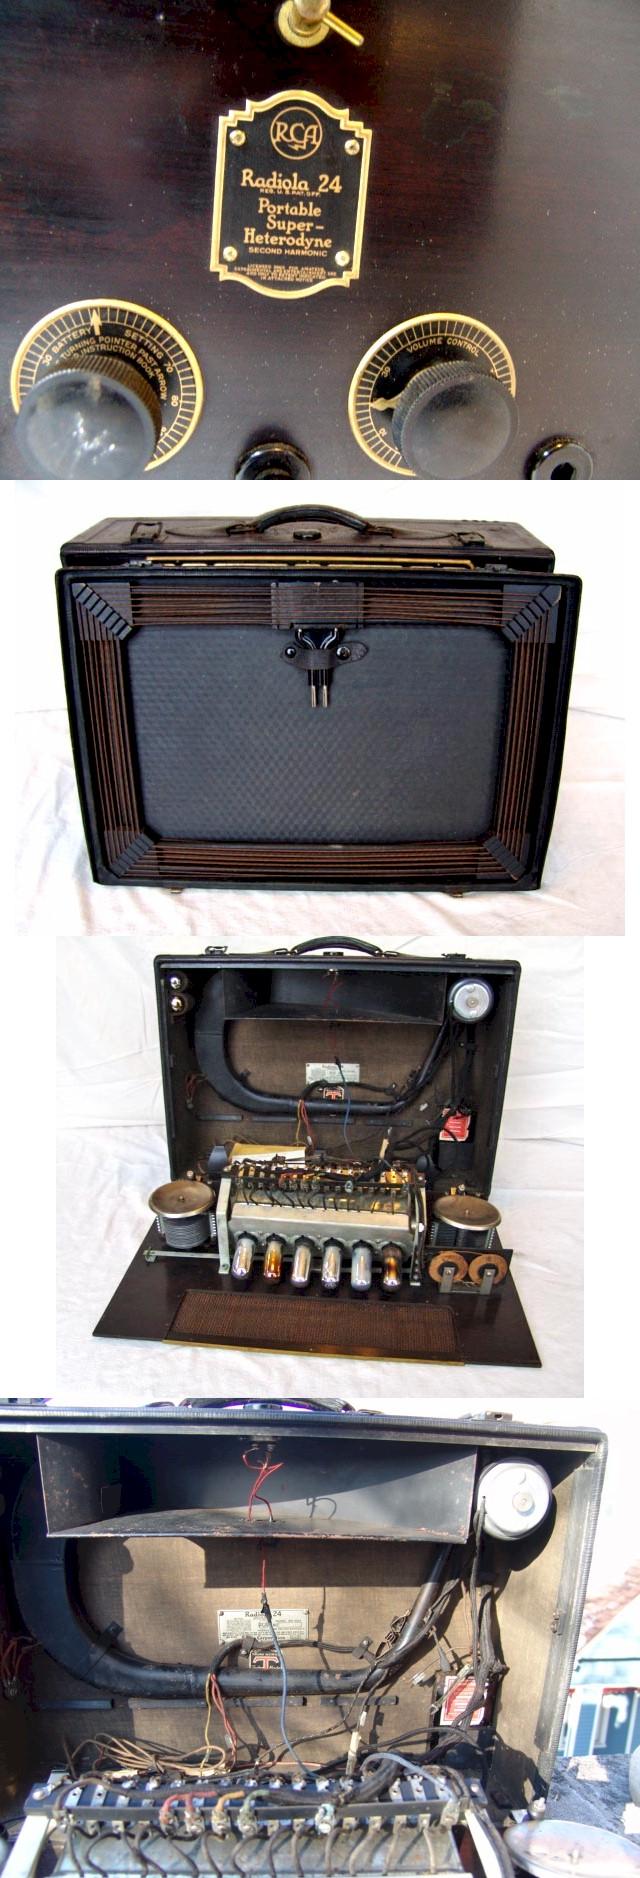 RCA Radiola 24 Portable (1923)